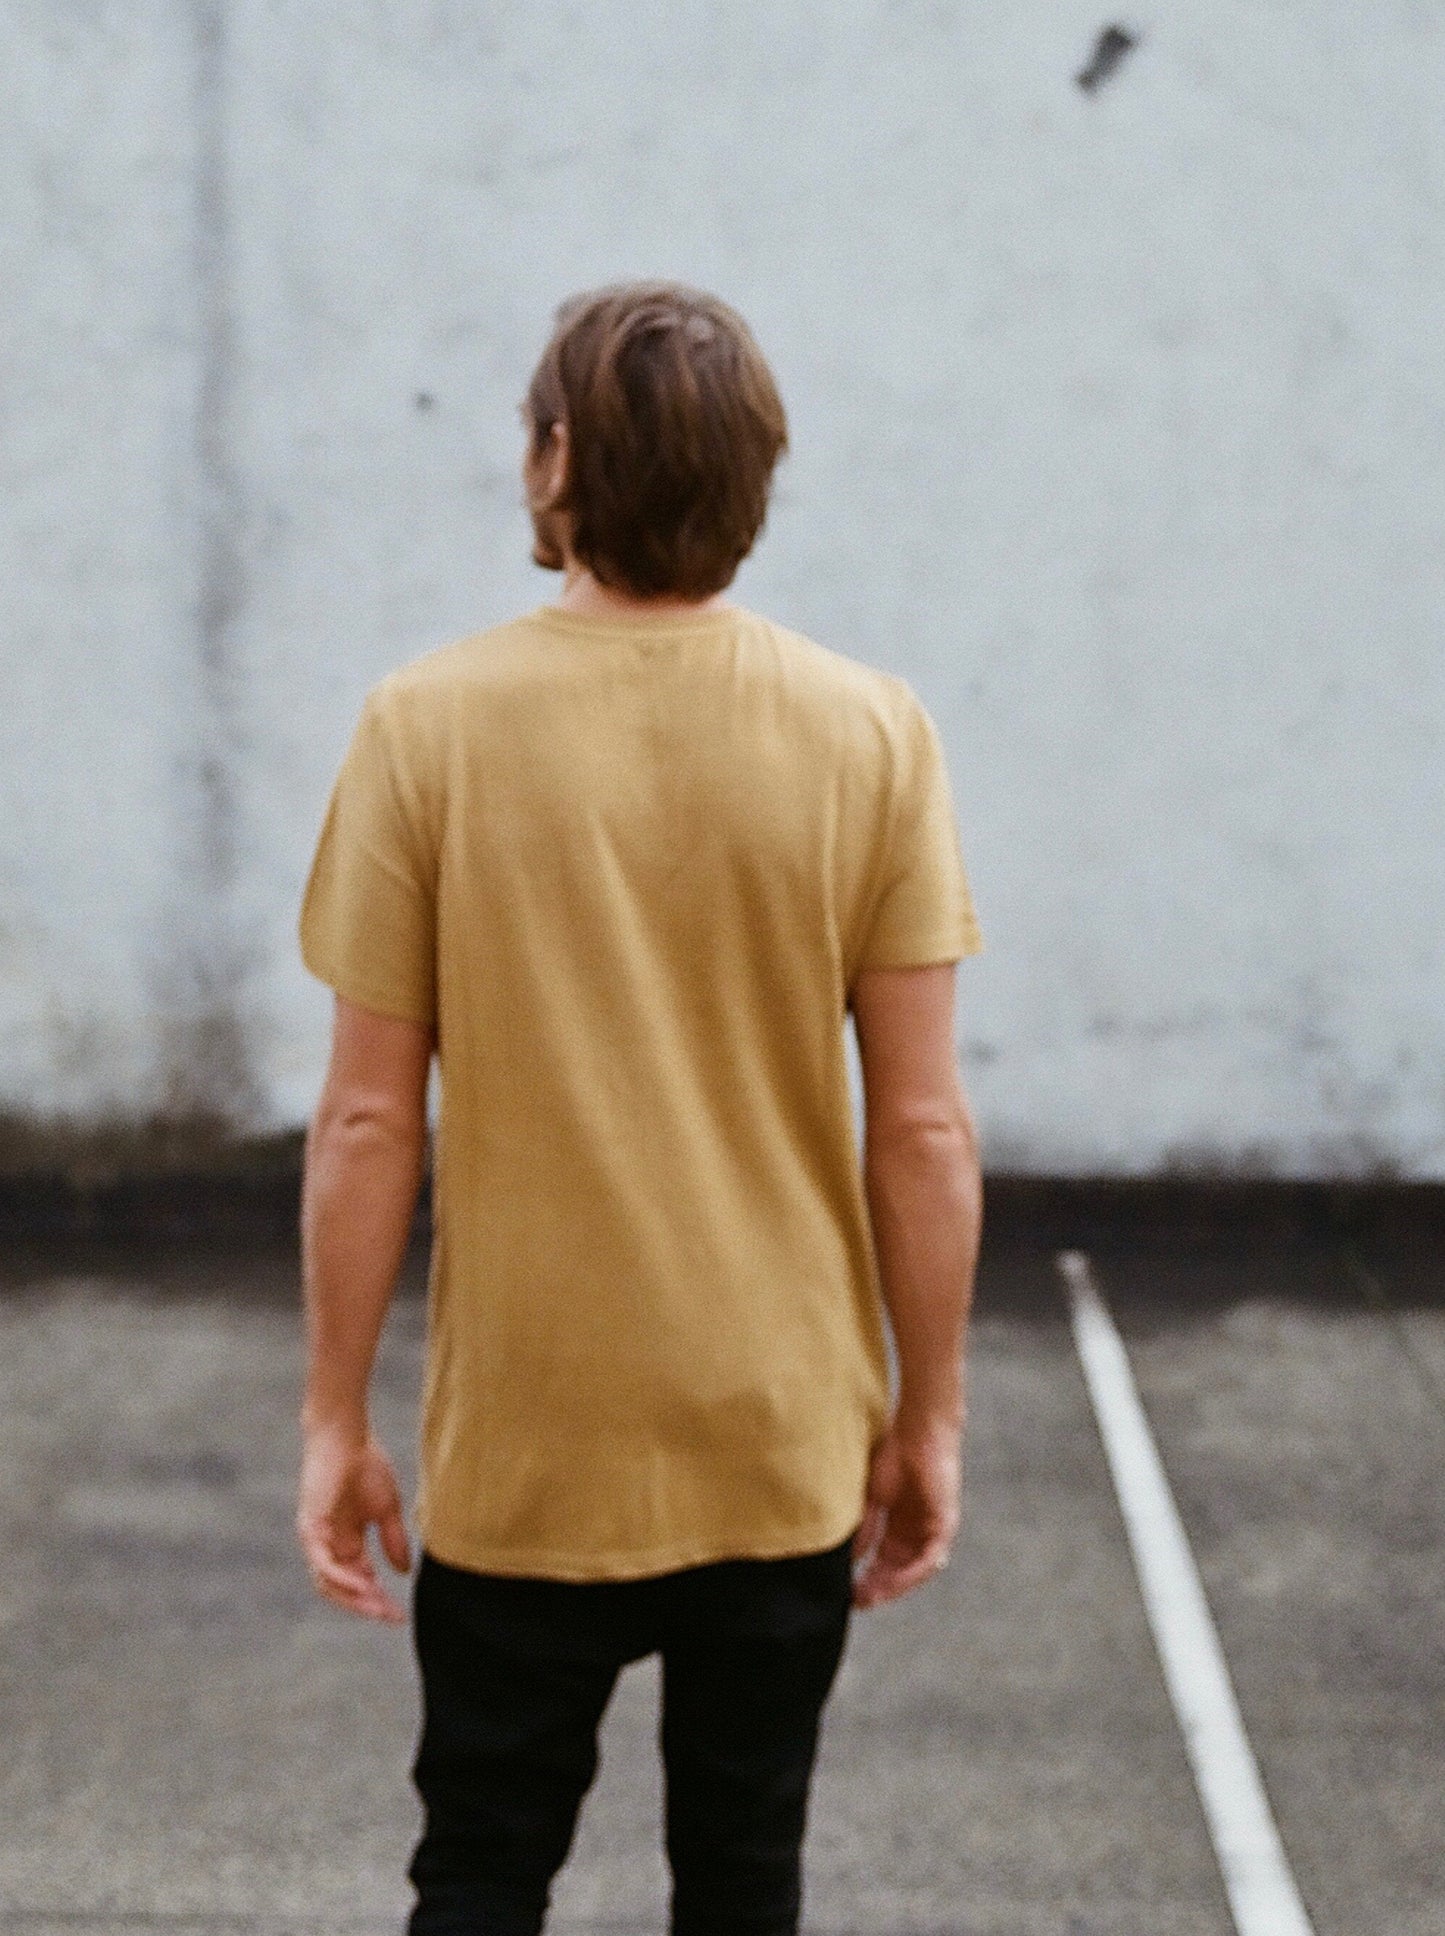 Hemp Clothing Australia - Mens Classic T-Shirt - Chai